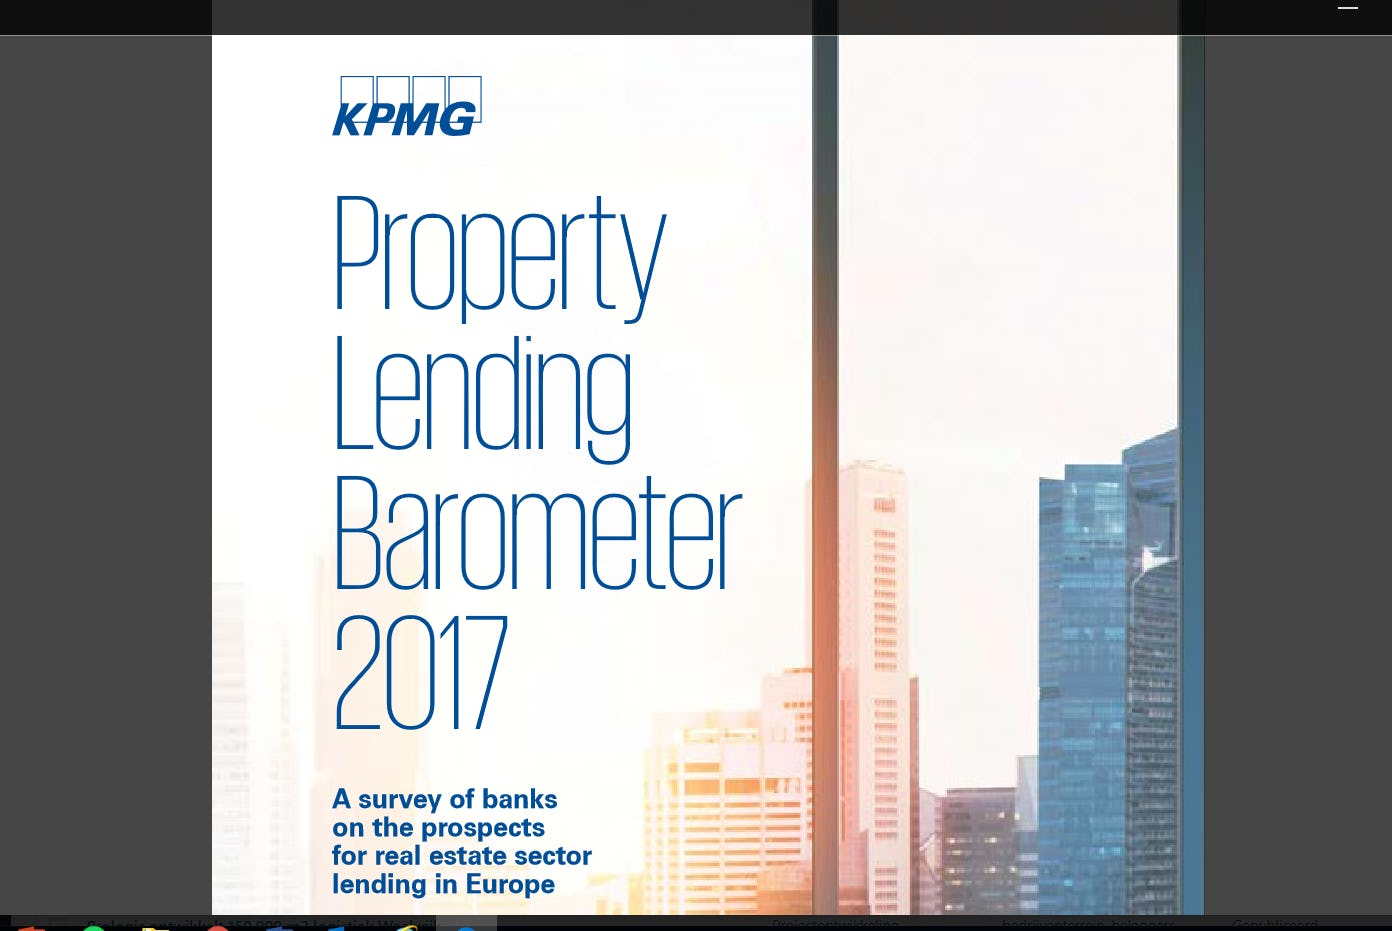 KPMG Property Lending Barometer 2017